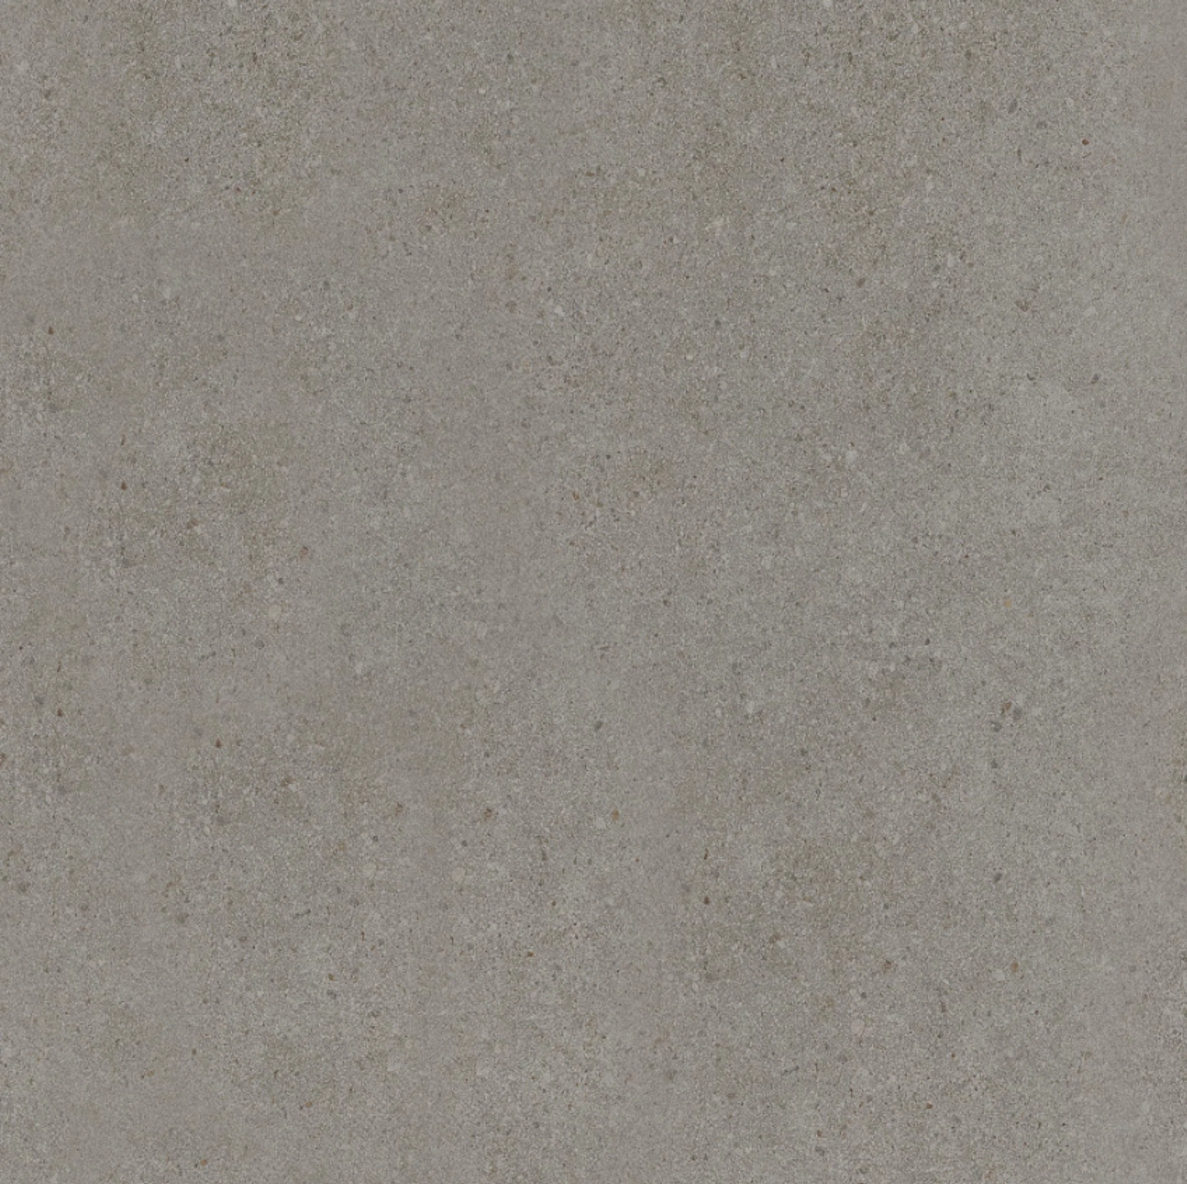 Gresie portelanata, polisata, rectificata, interior / exterior, Slash Soft Grey 60 x 60 cm